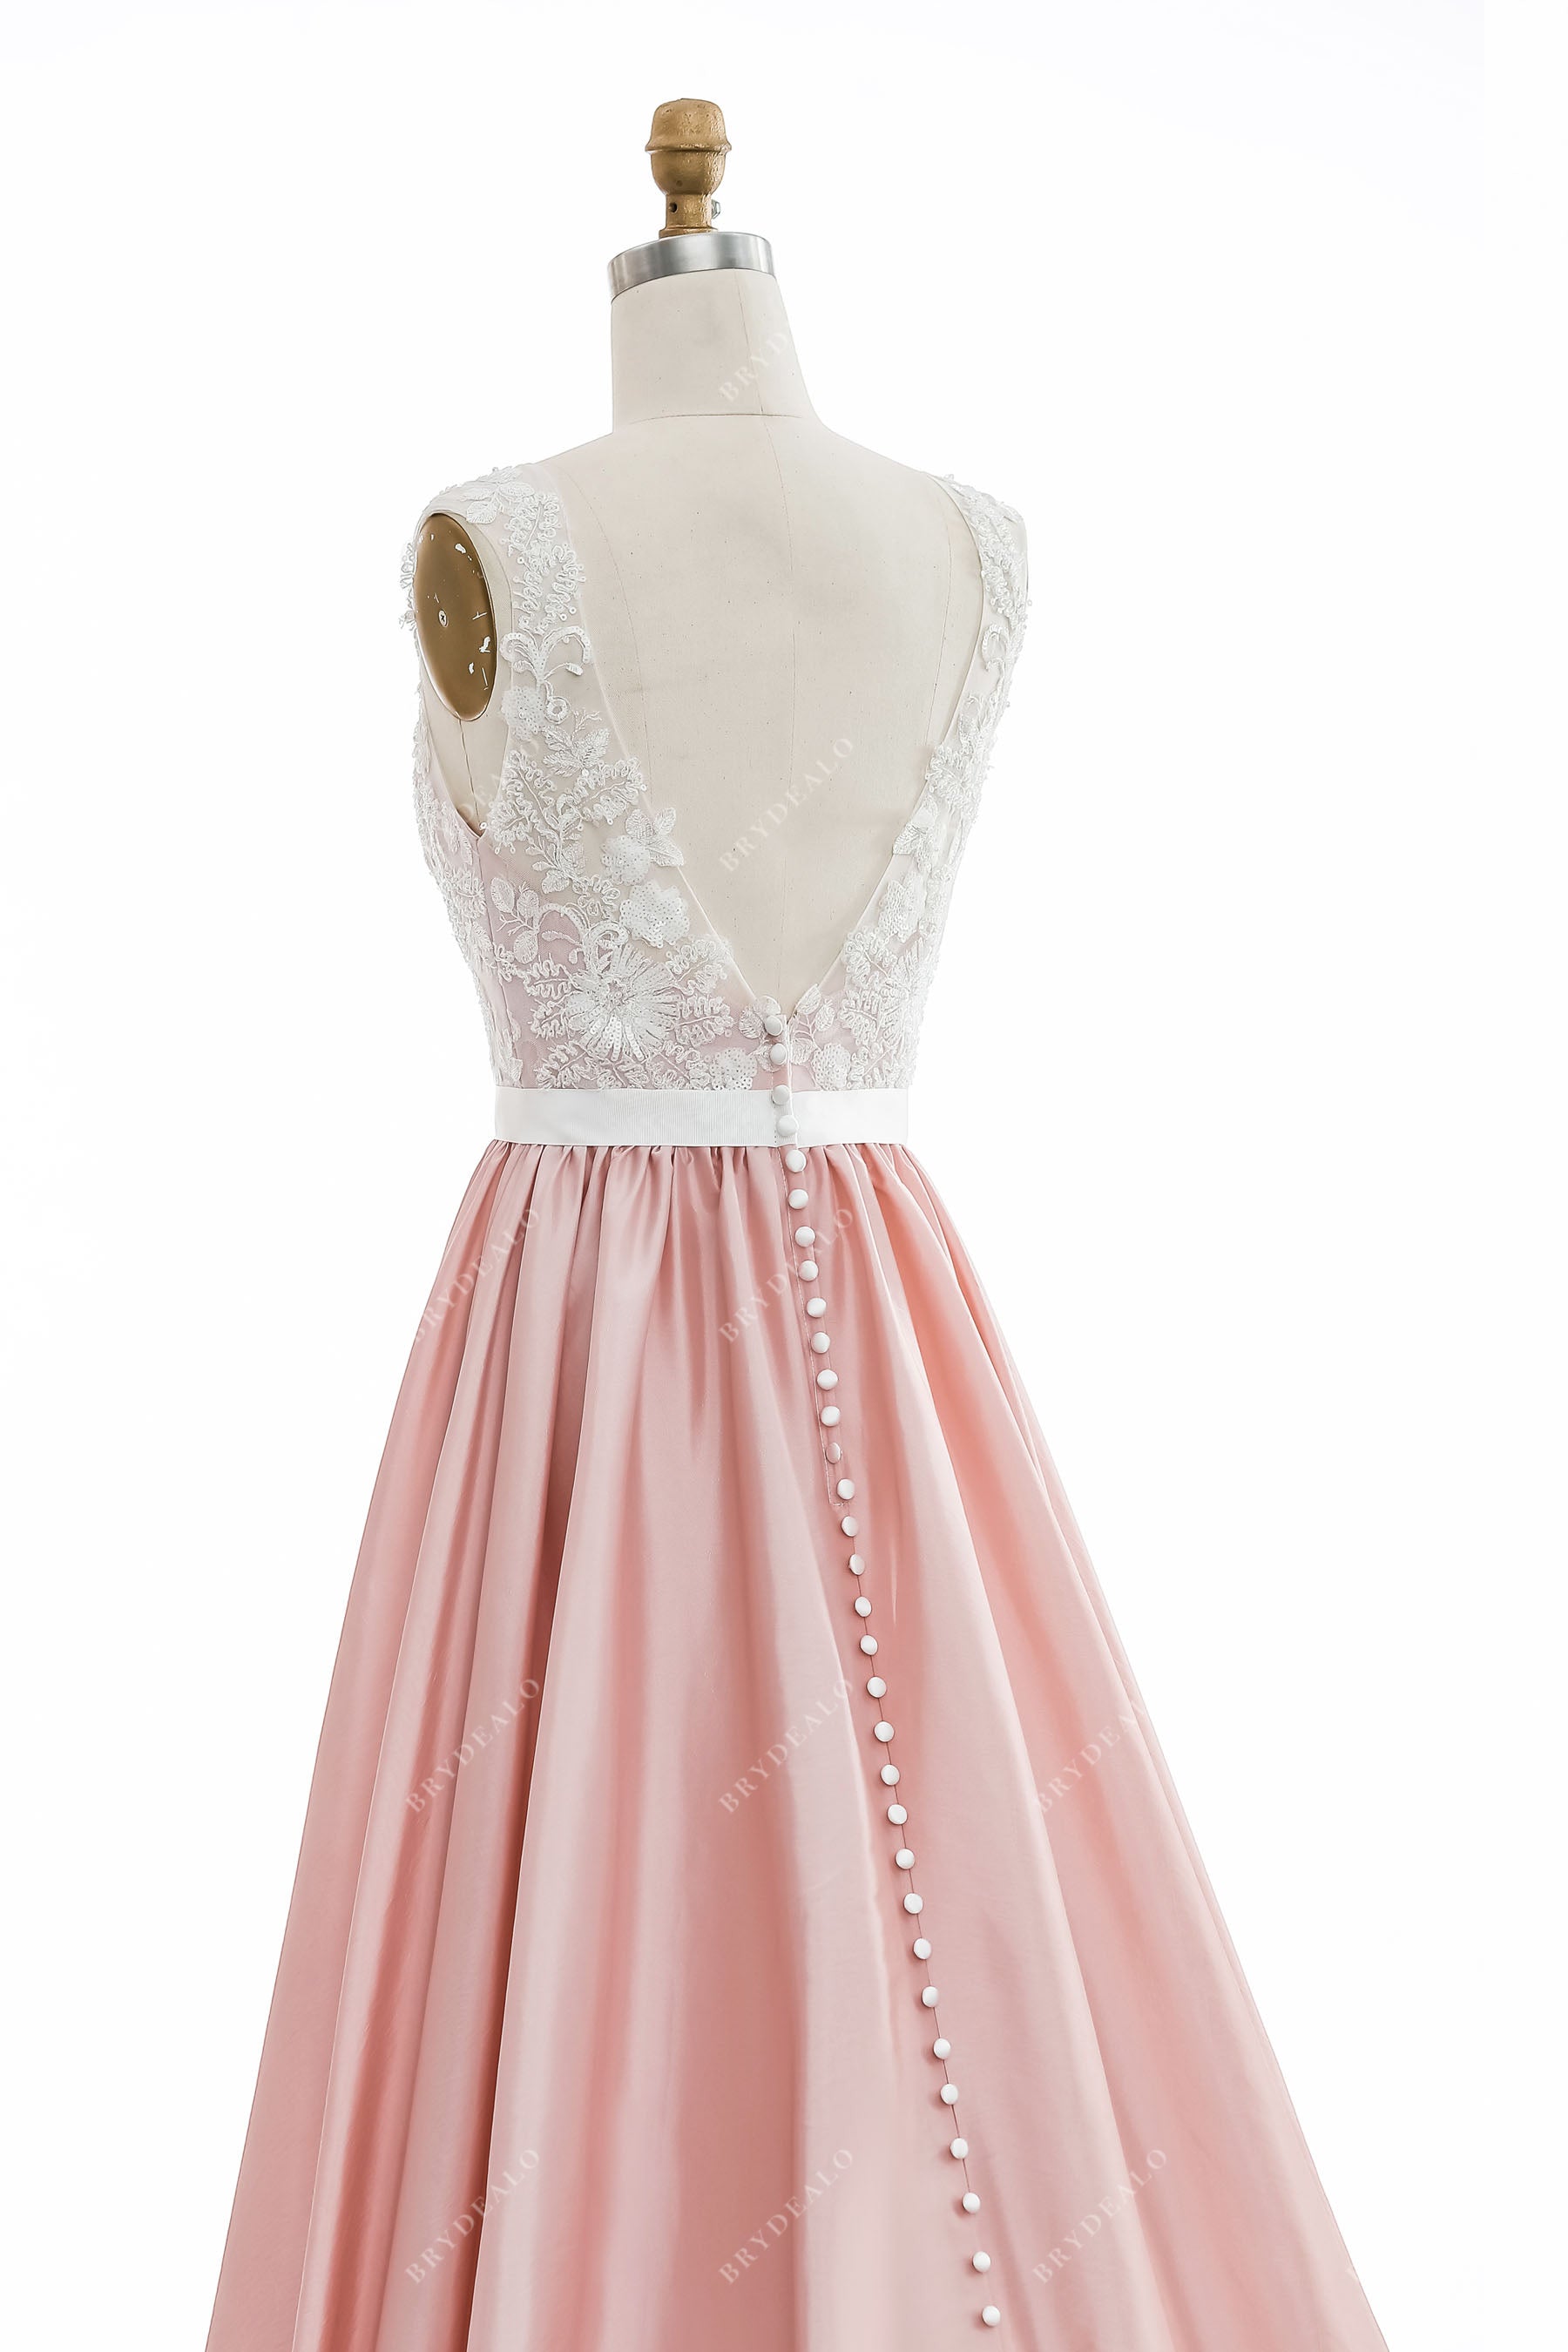 open V-back ivory lace pink taffeta bridal dress